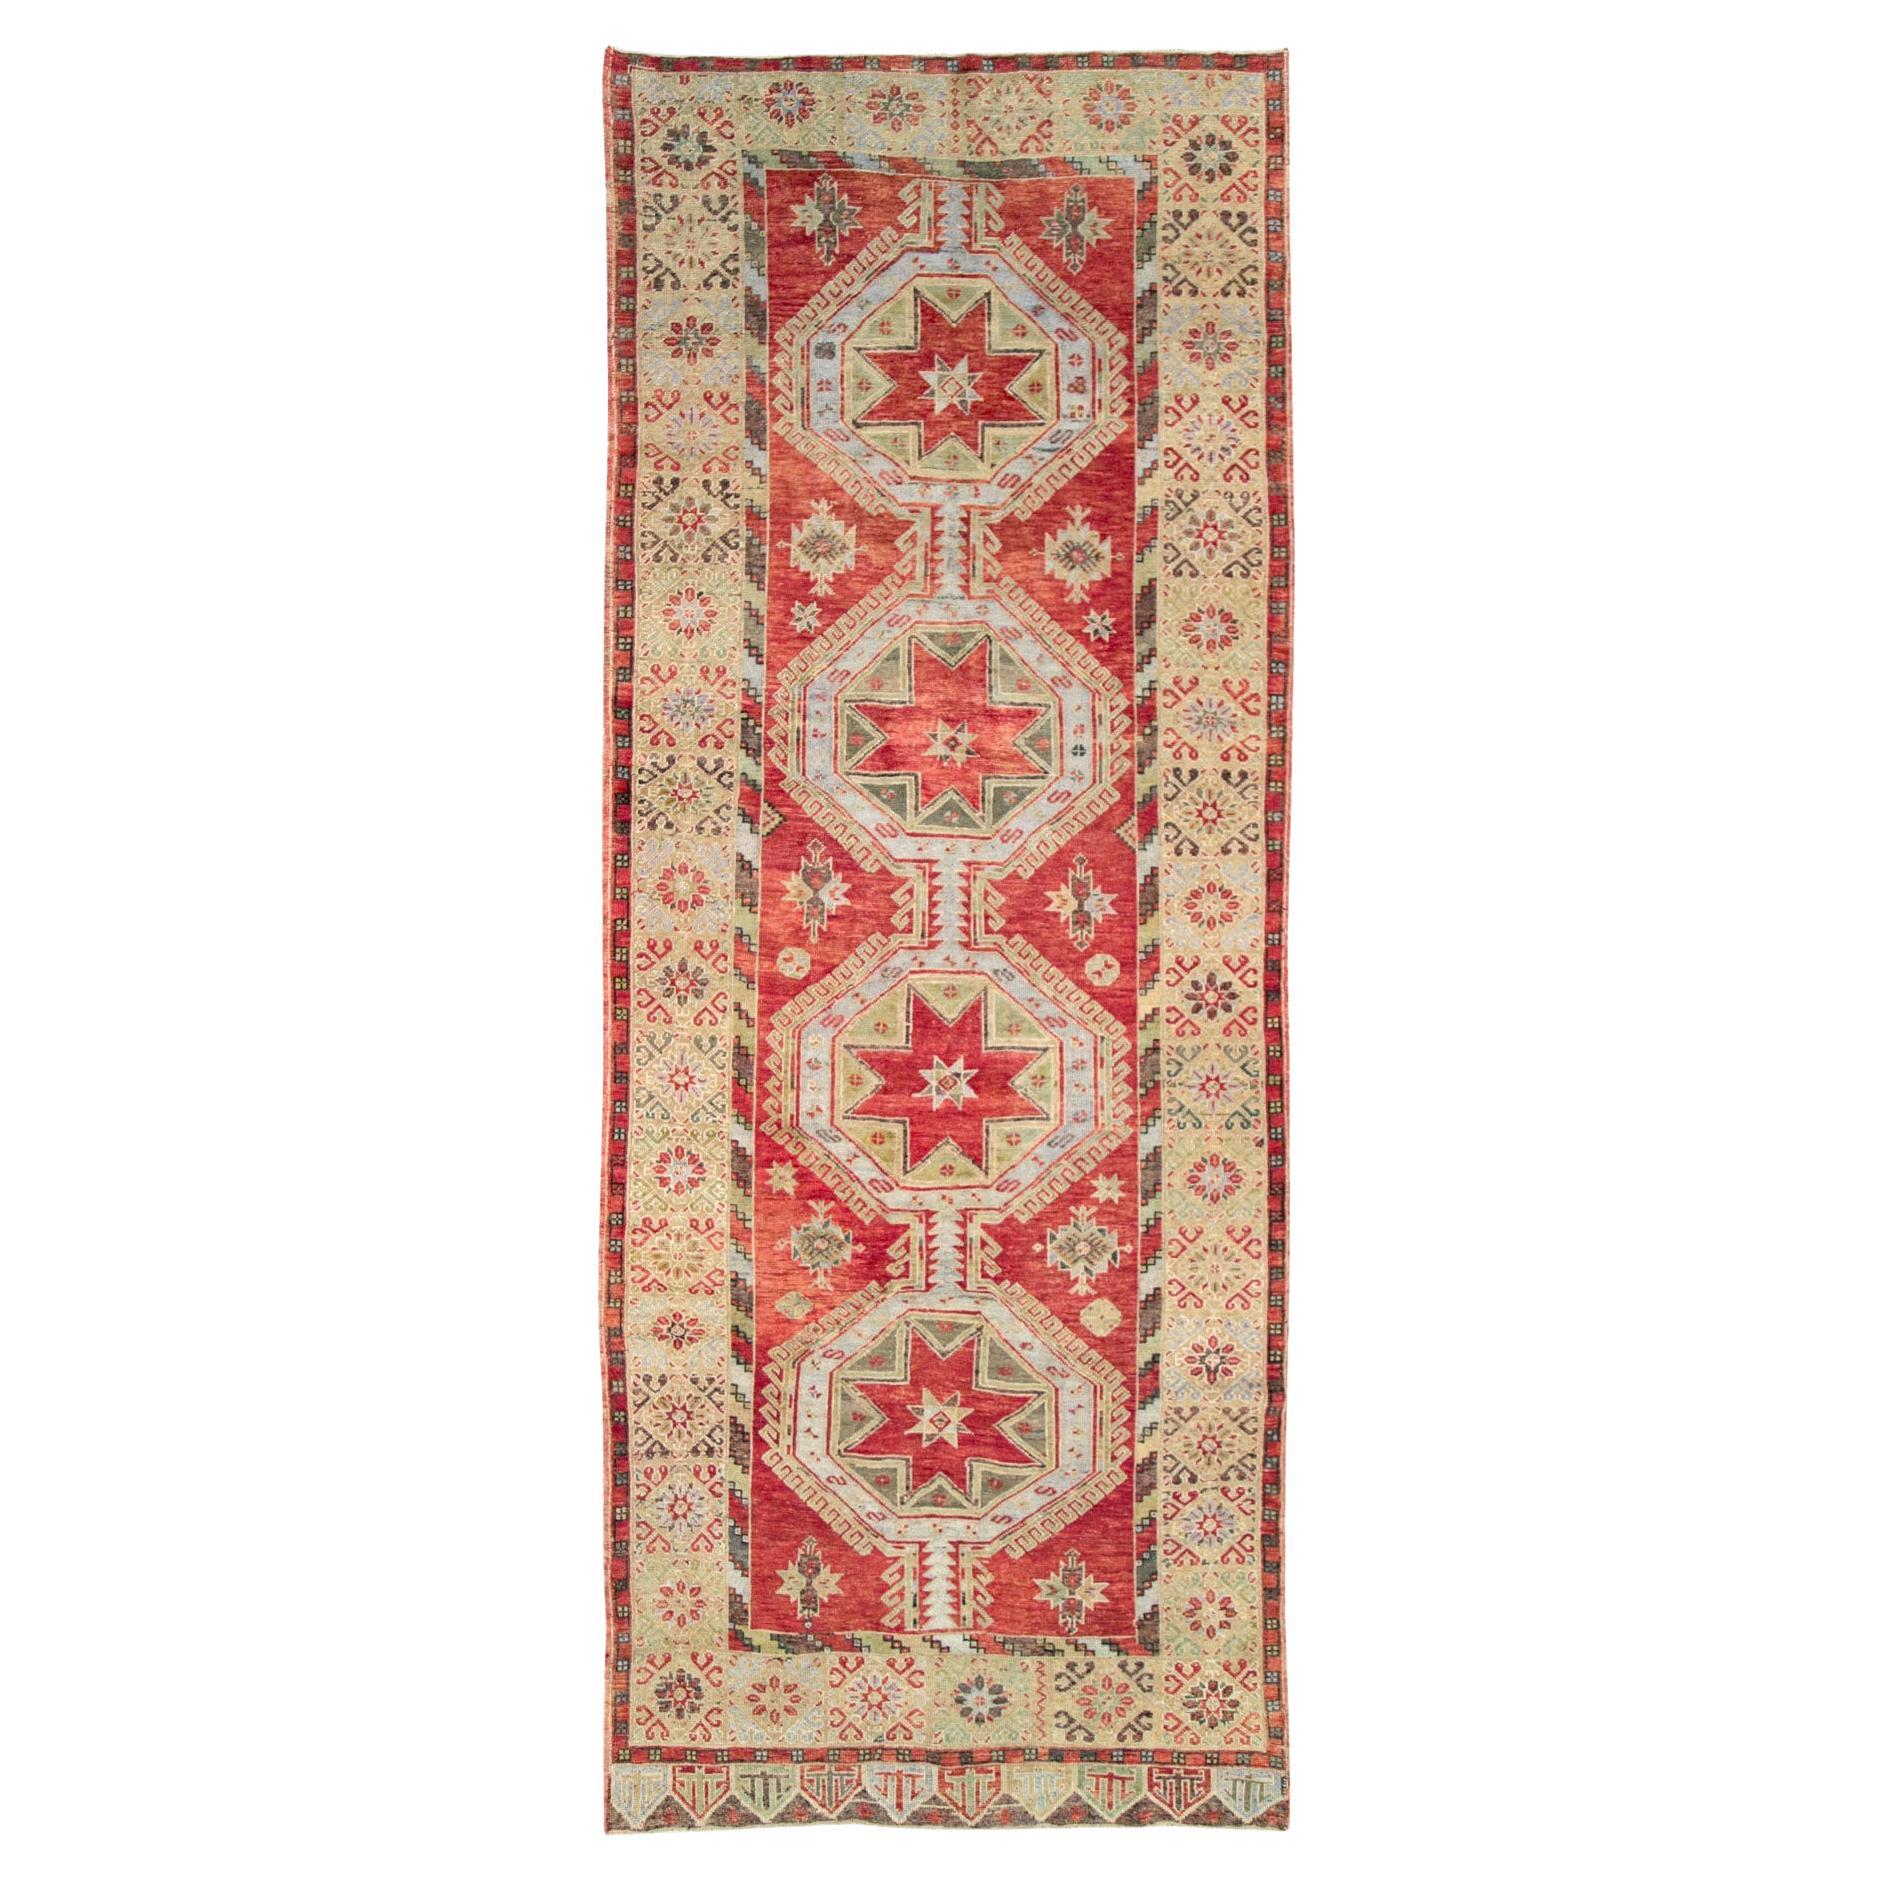 Mid-20th Century Handmade Turkish Anatolian Gallery Carpet